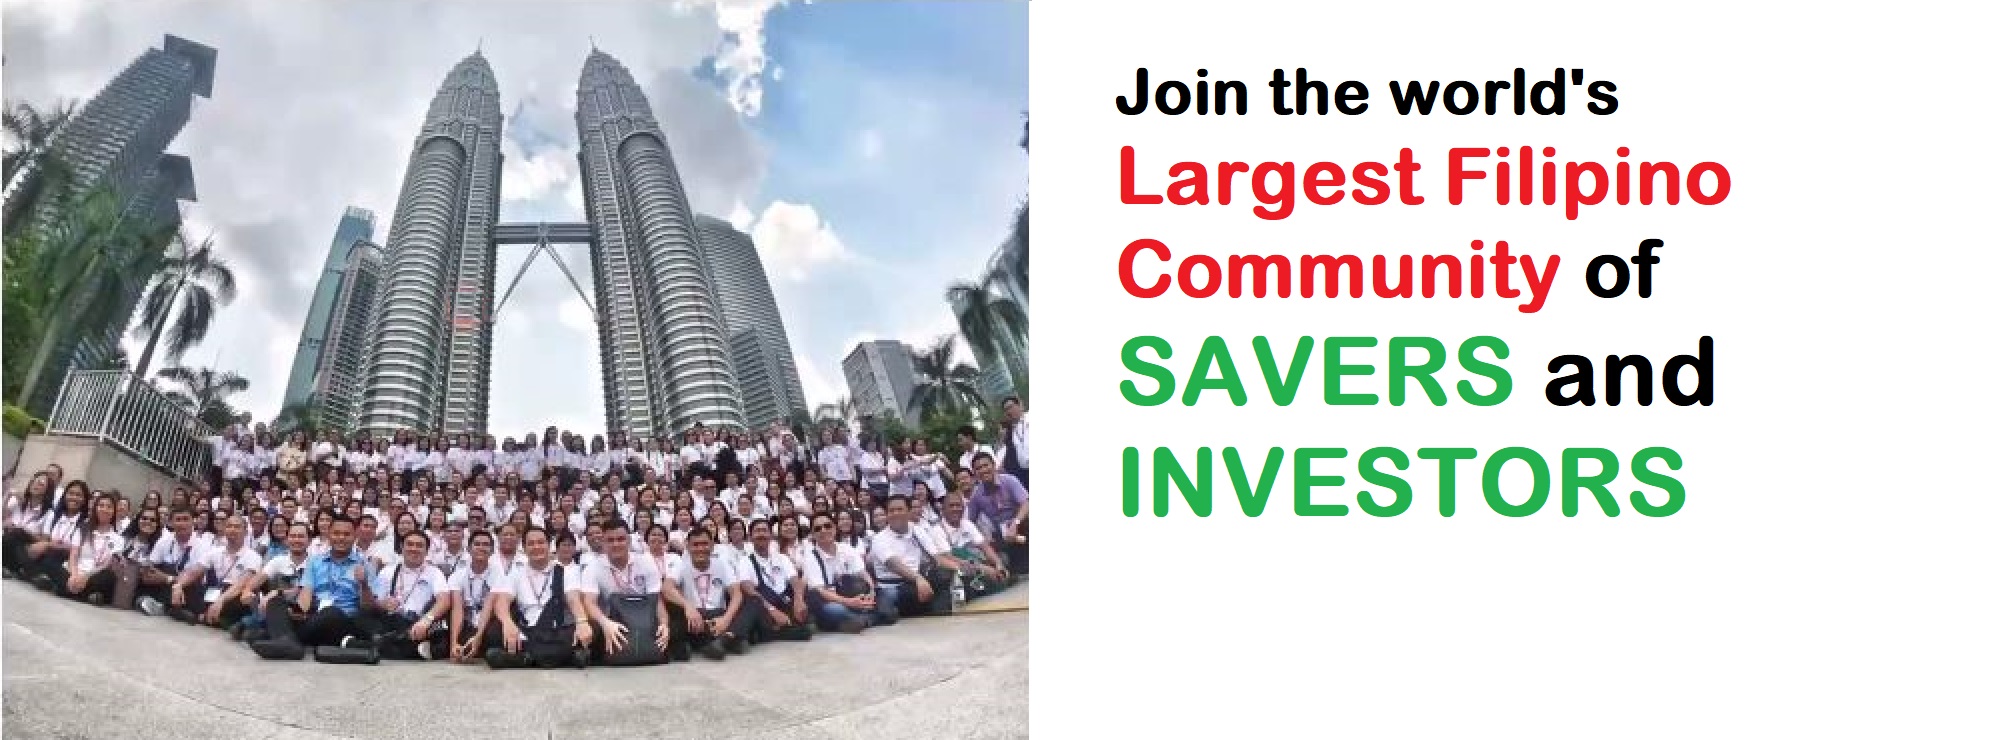 The World's Biggest Filipino Community of Savers and Investors